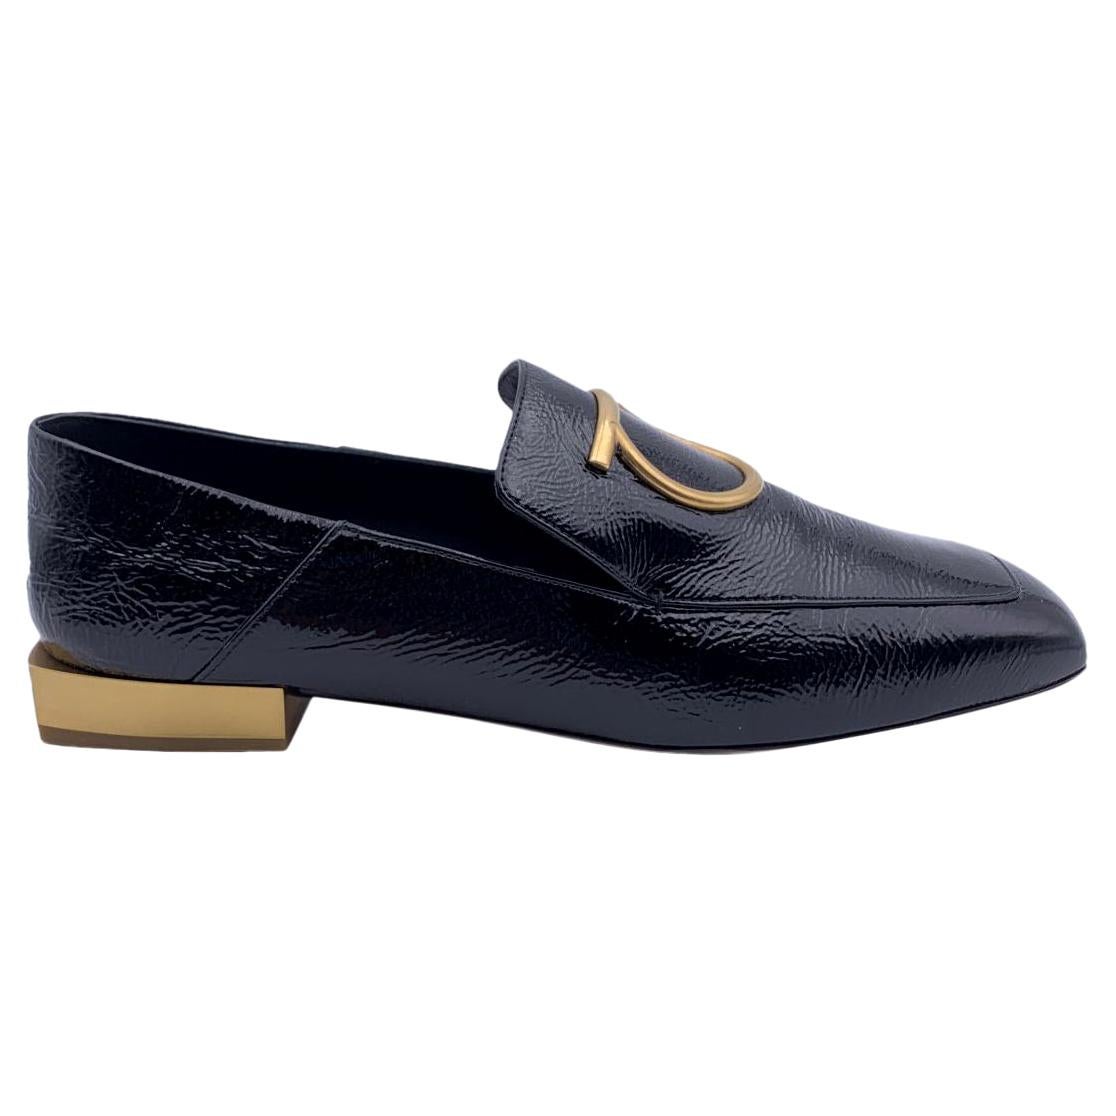 Salvatore Ferragamo Black Patent Leather Lana Loafers Size 7C 37.5 C